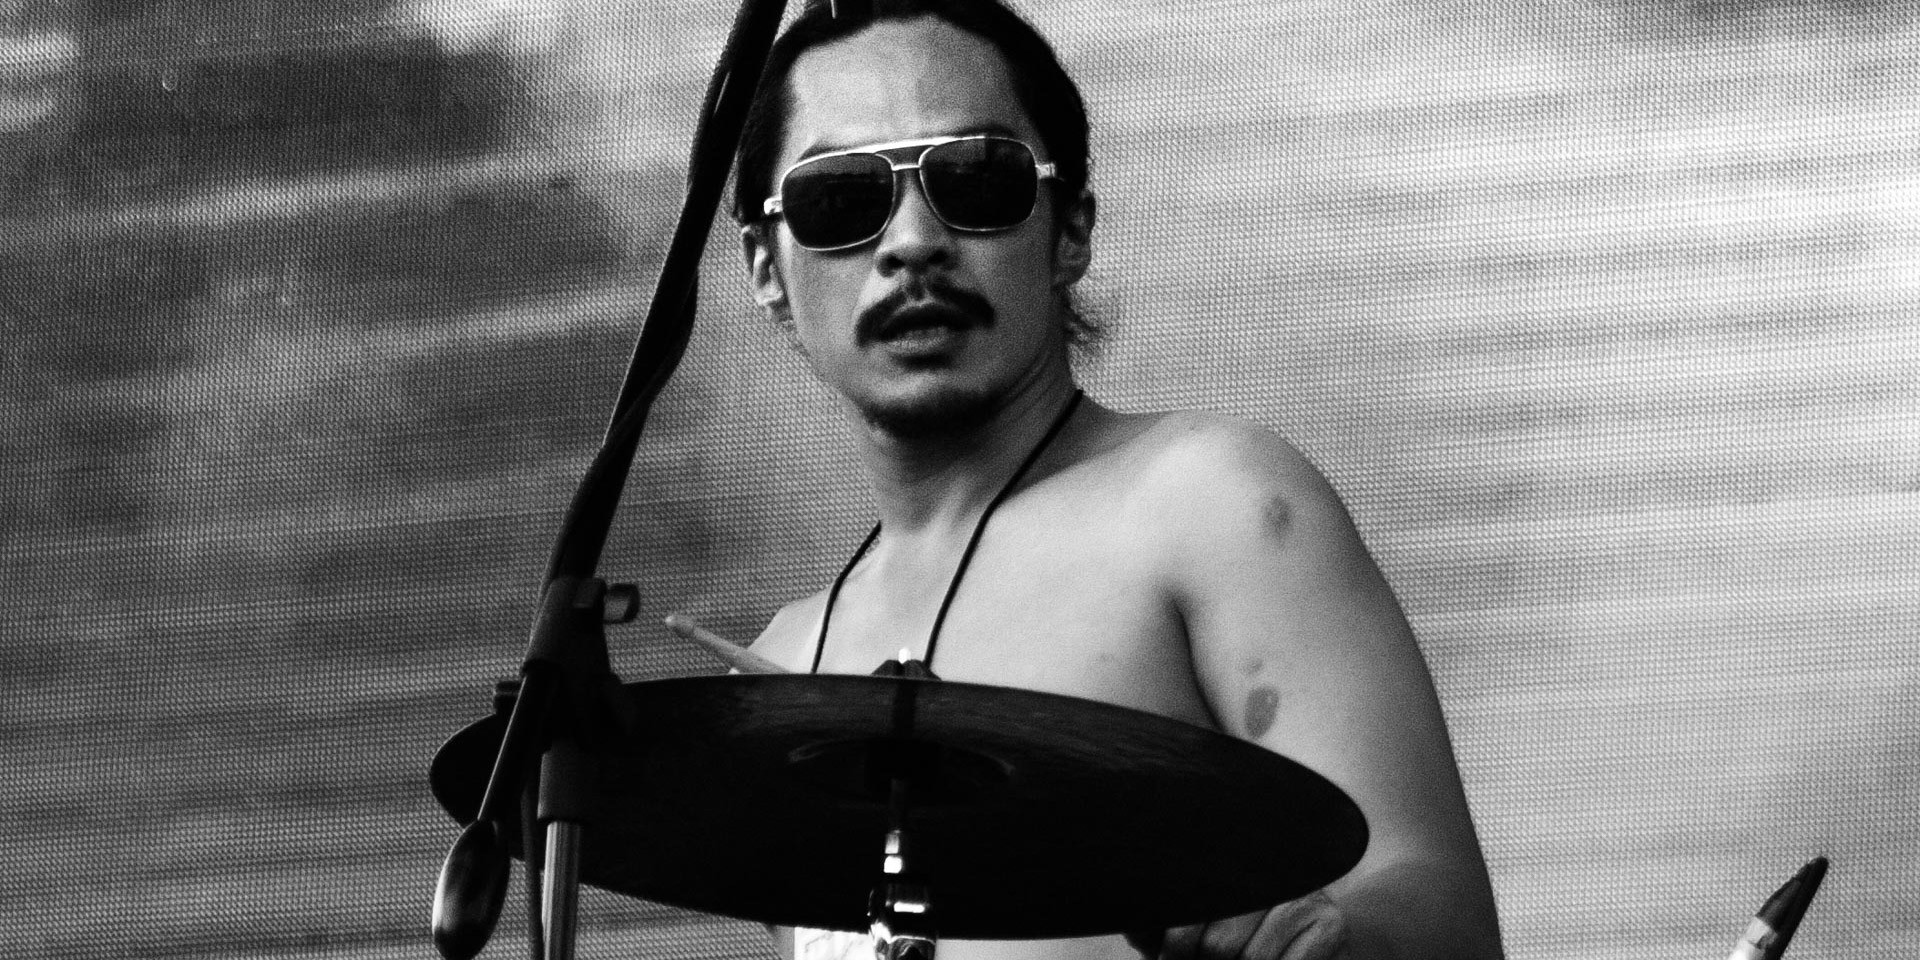 The Filipino music community mourns the loss of Razorback drummer Brian Velasco